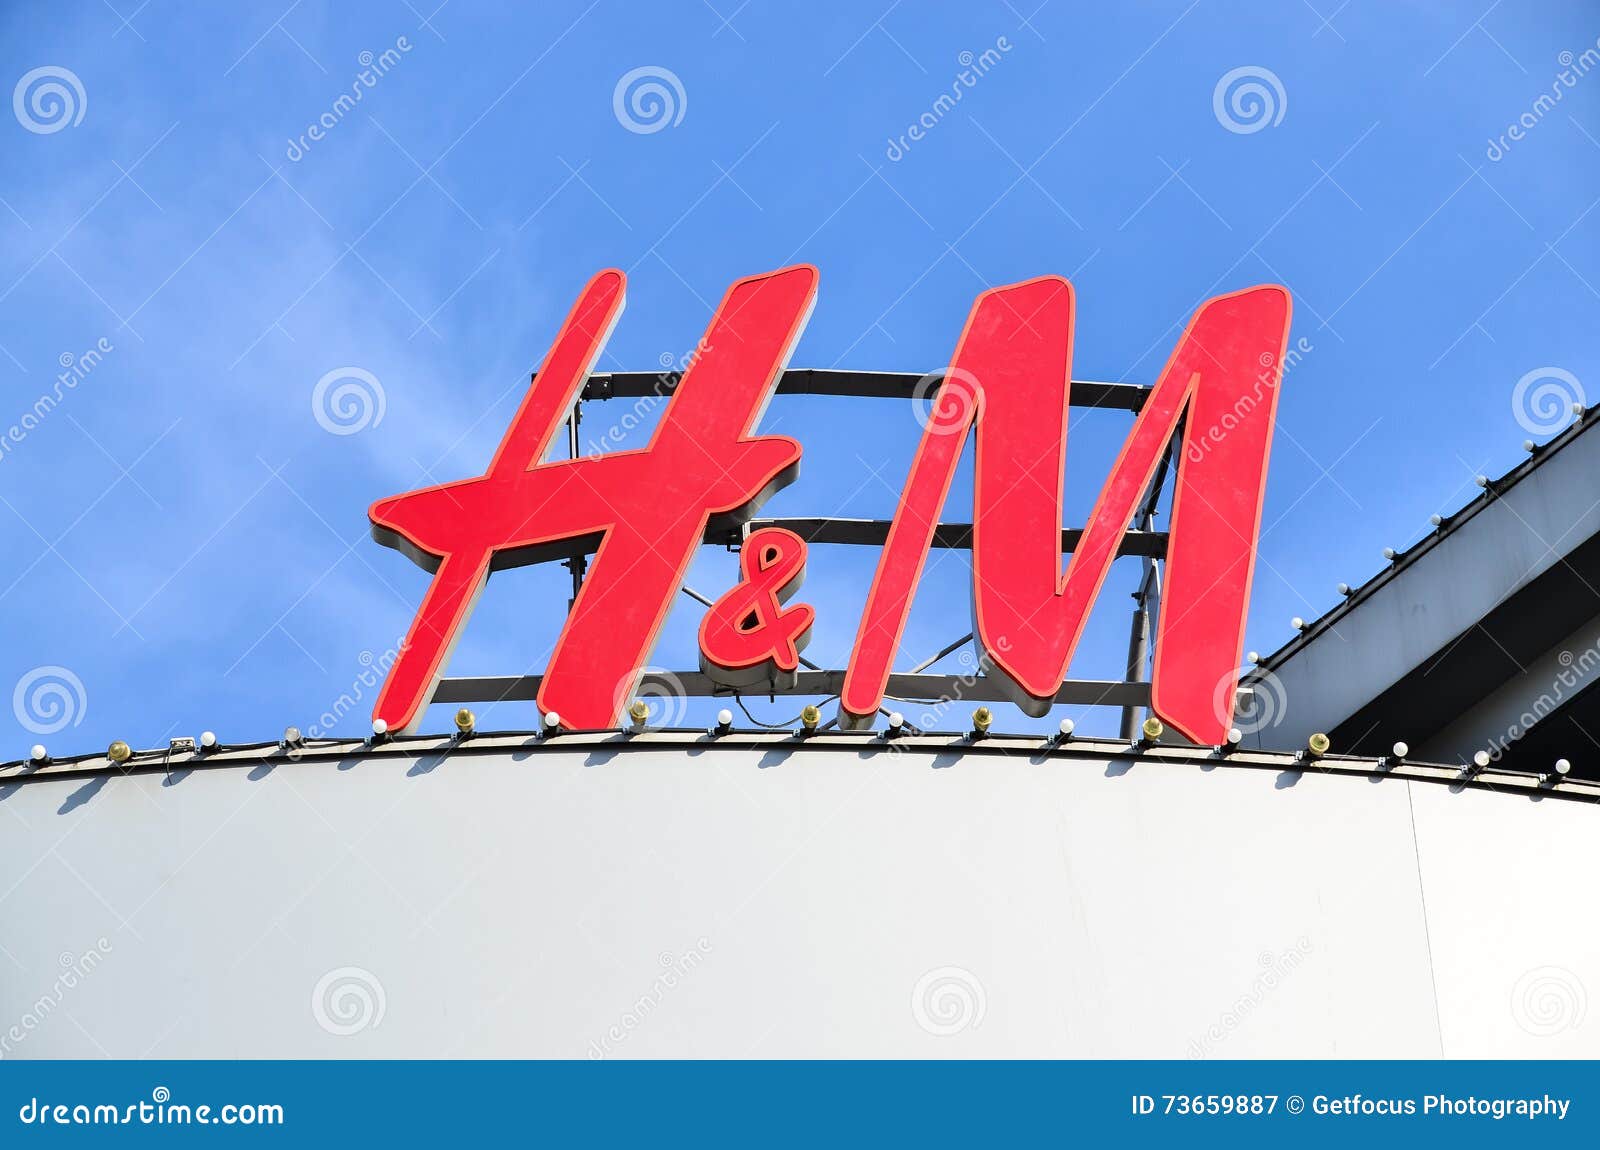 Hm poland. H M Севастополь. H&M Польша. Фото логотипа магазина h&m. Эмблема магазина НМ.